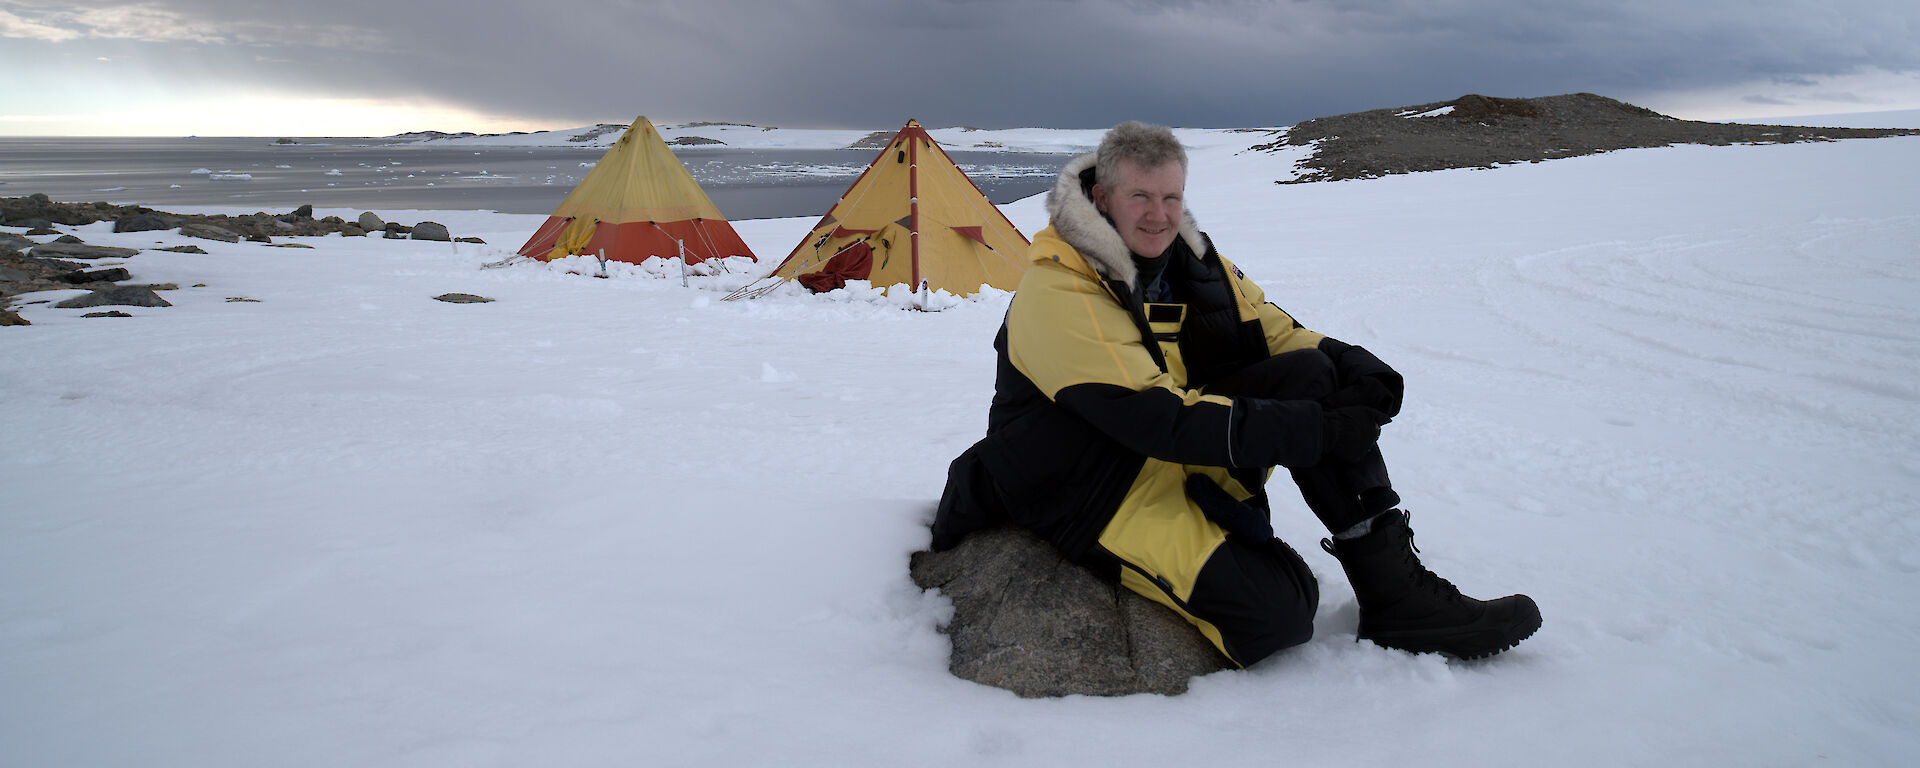 Environment Minister Tony Burke at Robinson’s Ridge field hut, near Casey station Antarctica.